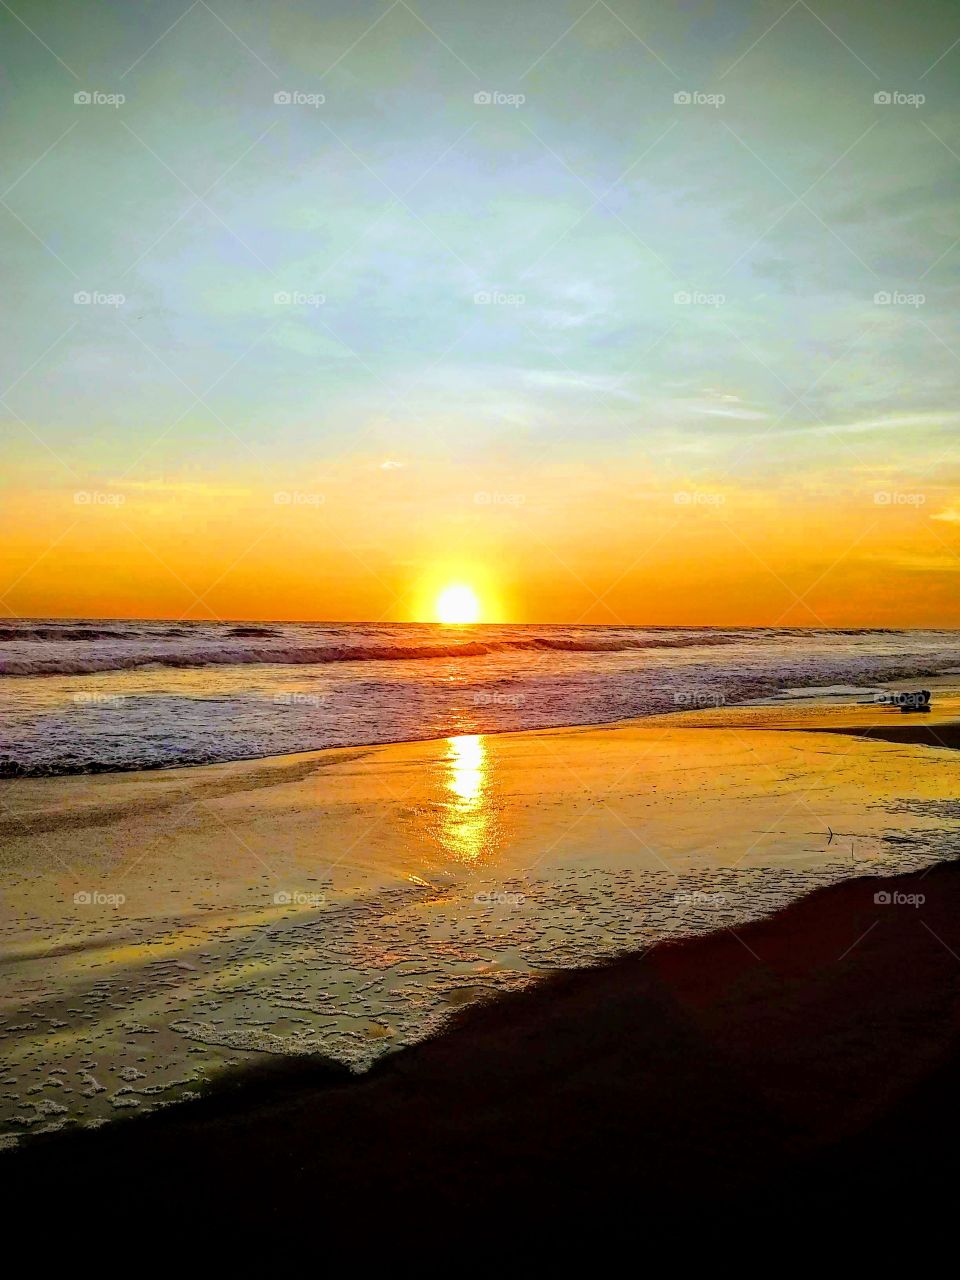 a beautiful sunset on the beach